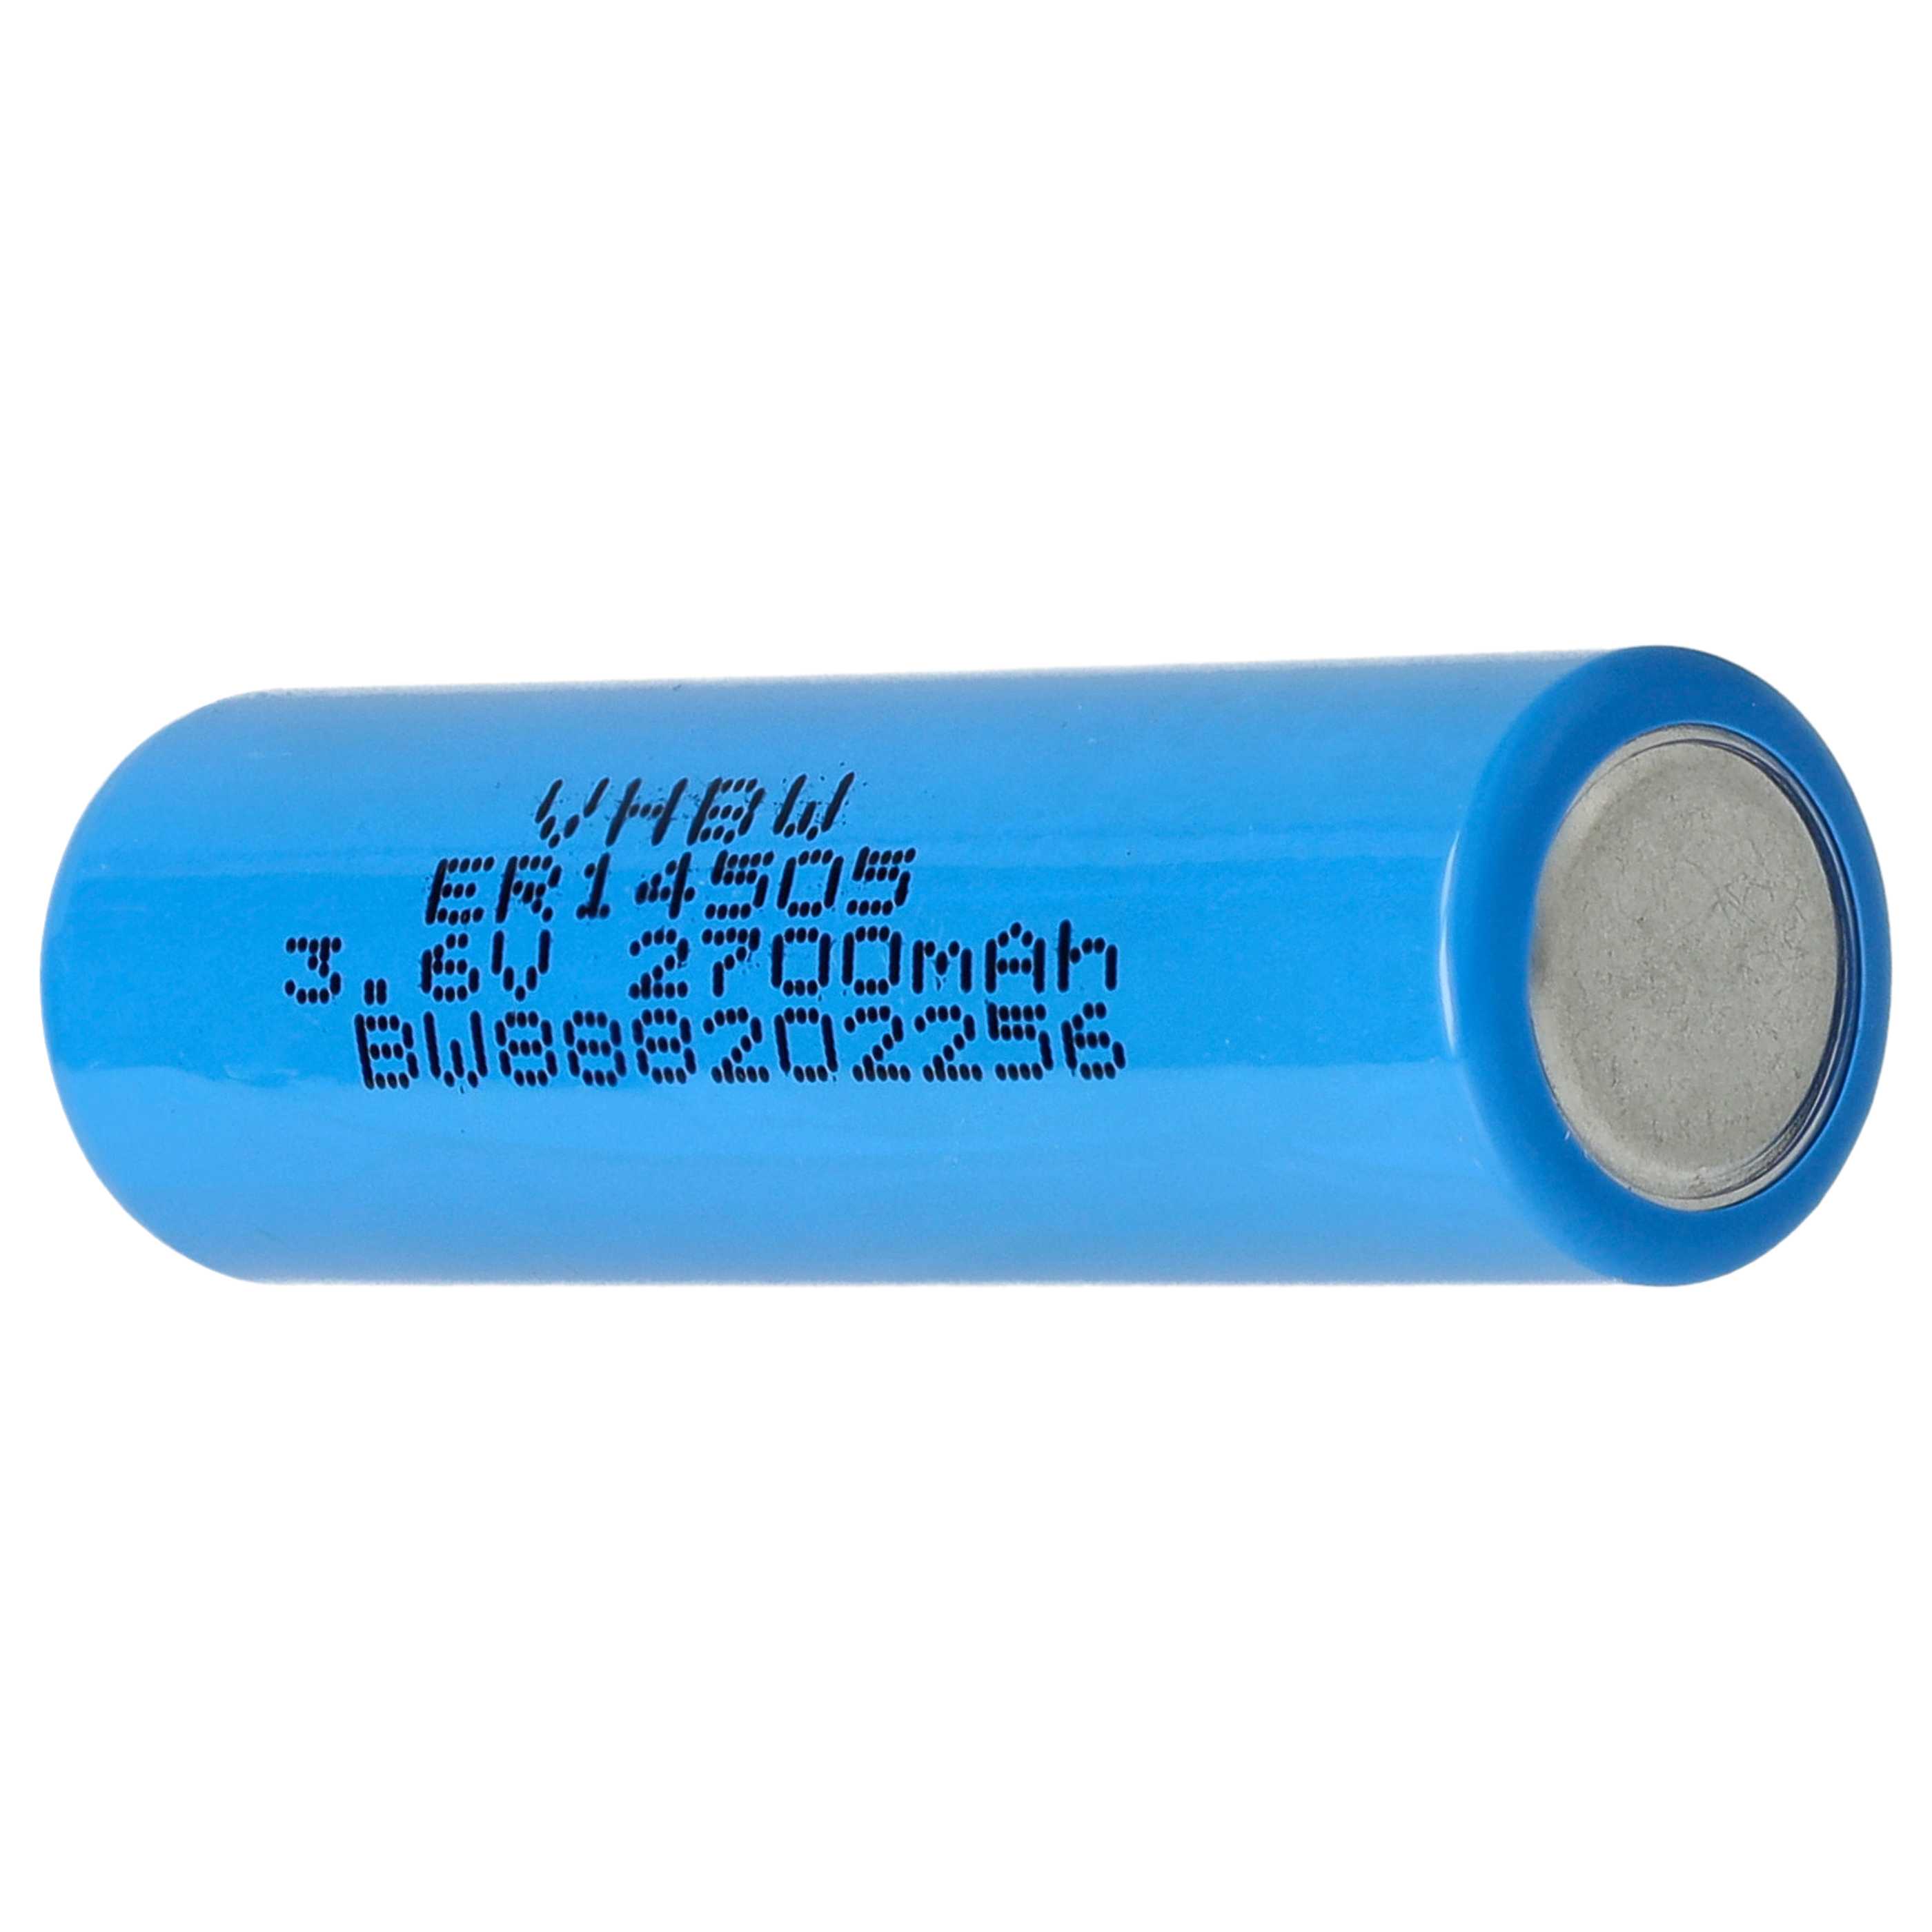 ER14250 Premium Battery for Viessmann Trimatik, Trimatik 2 - 2700mAh 3.6V Li-SOCl2